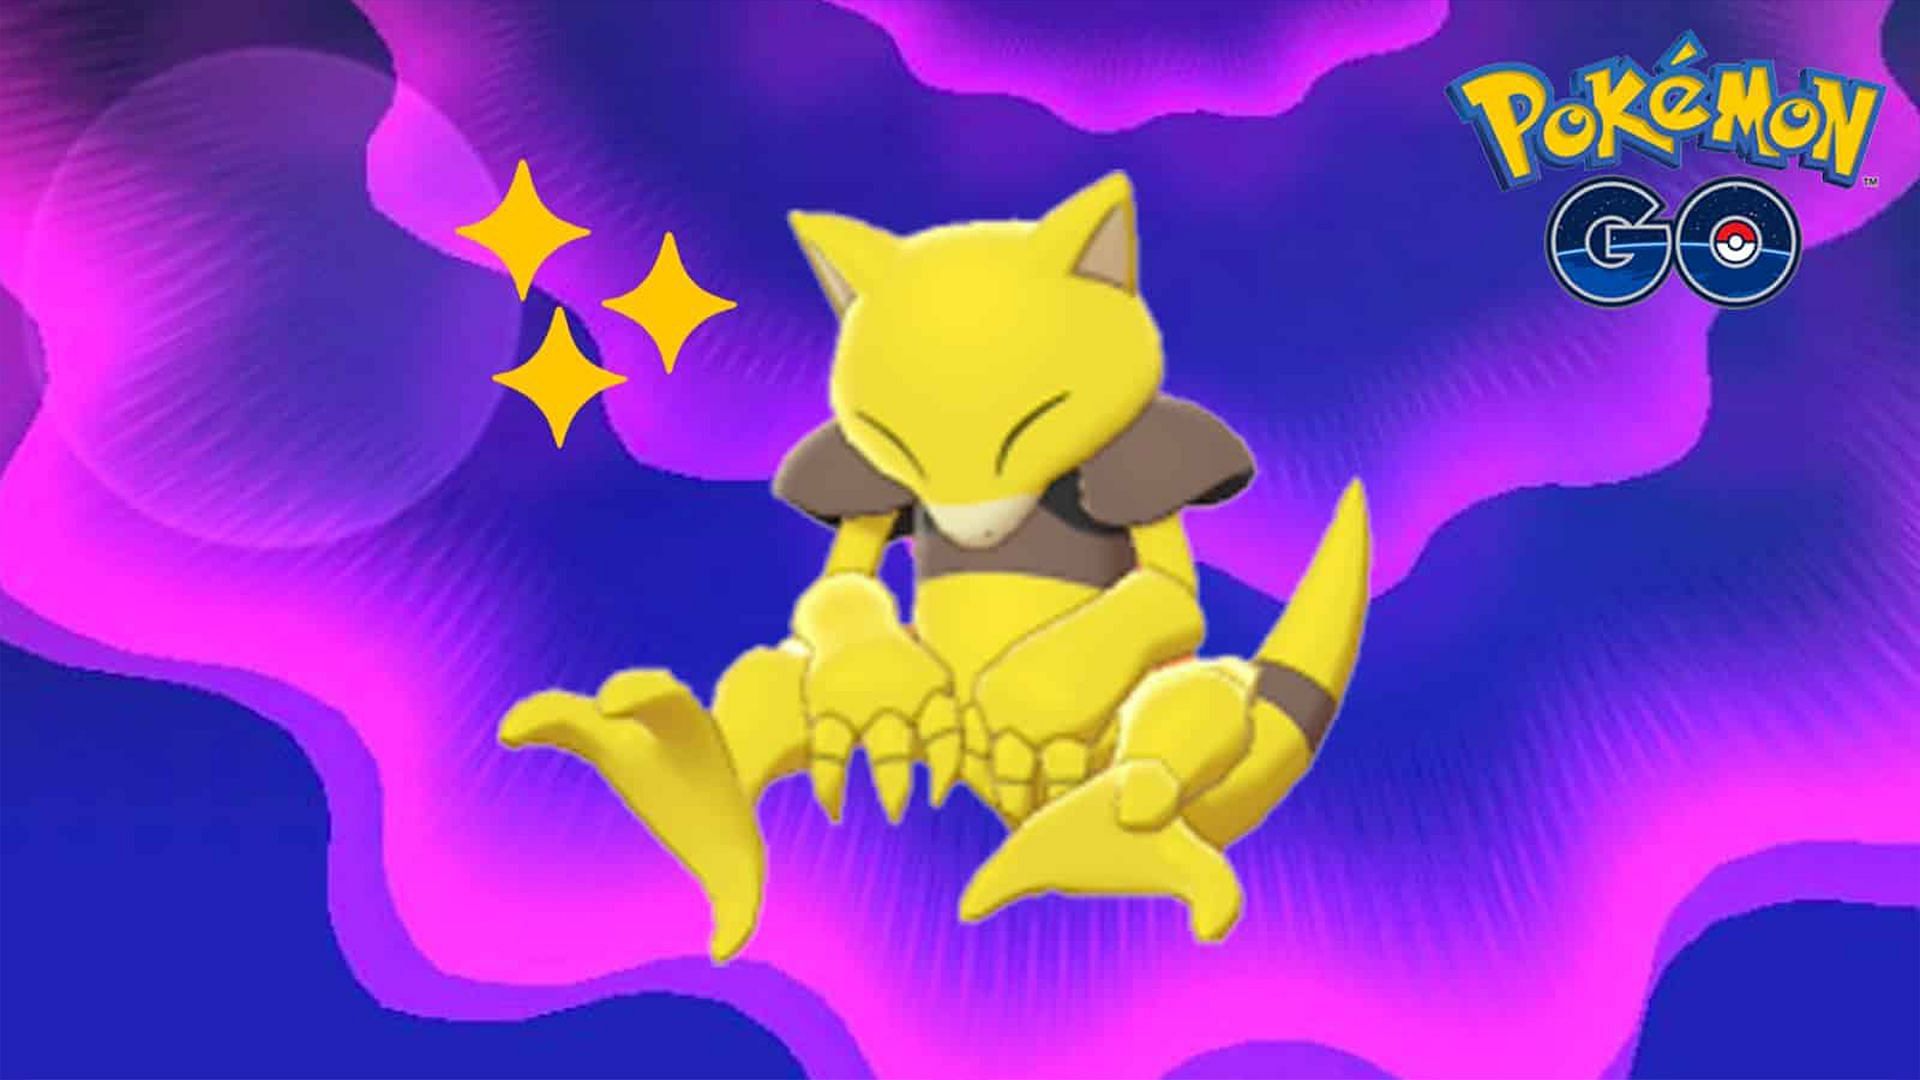 1,700+ Shinies, ULTRA RARE Shiny Pikachu Libre, Unown ?, 2018 Shiny  Fragment Pikachu, 2020 Shiny Halloween Gengar, APEX Lugia/Ho-oh, Shiny Mew,  All Galarian Birds